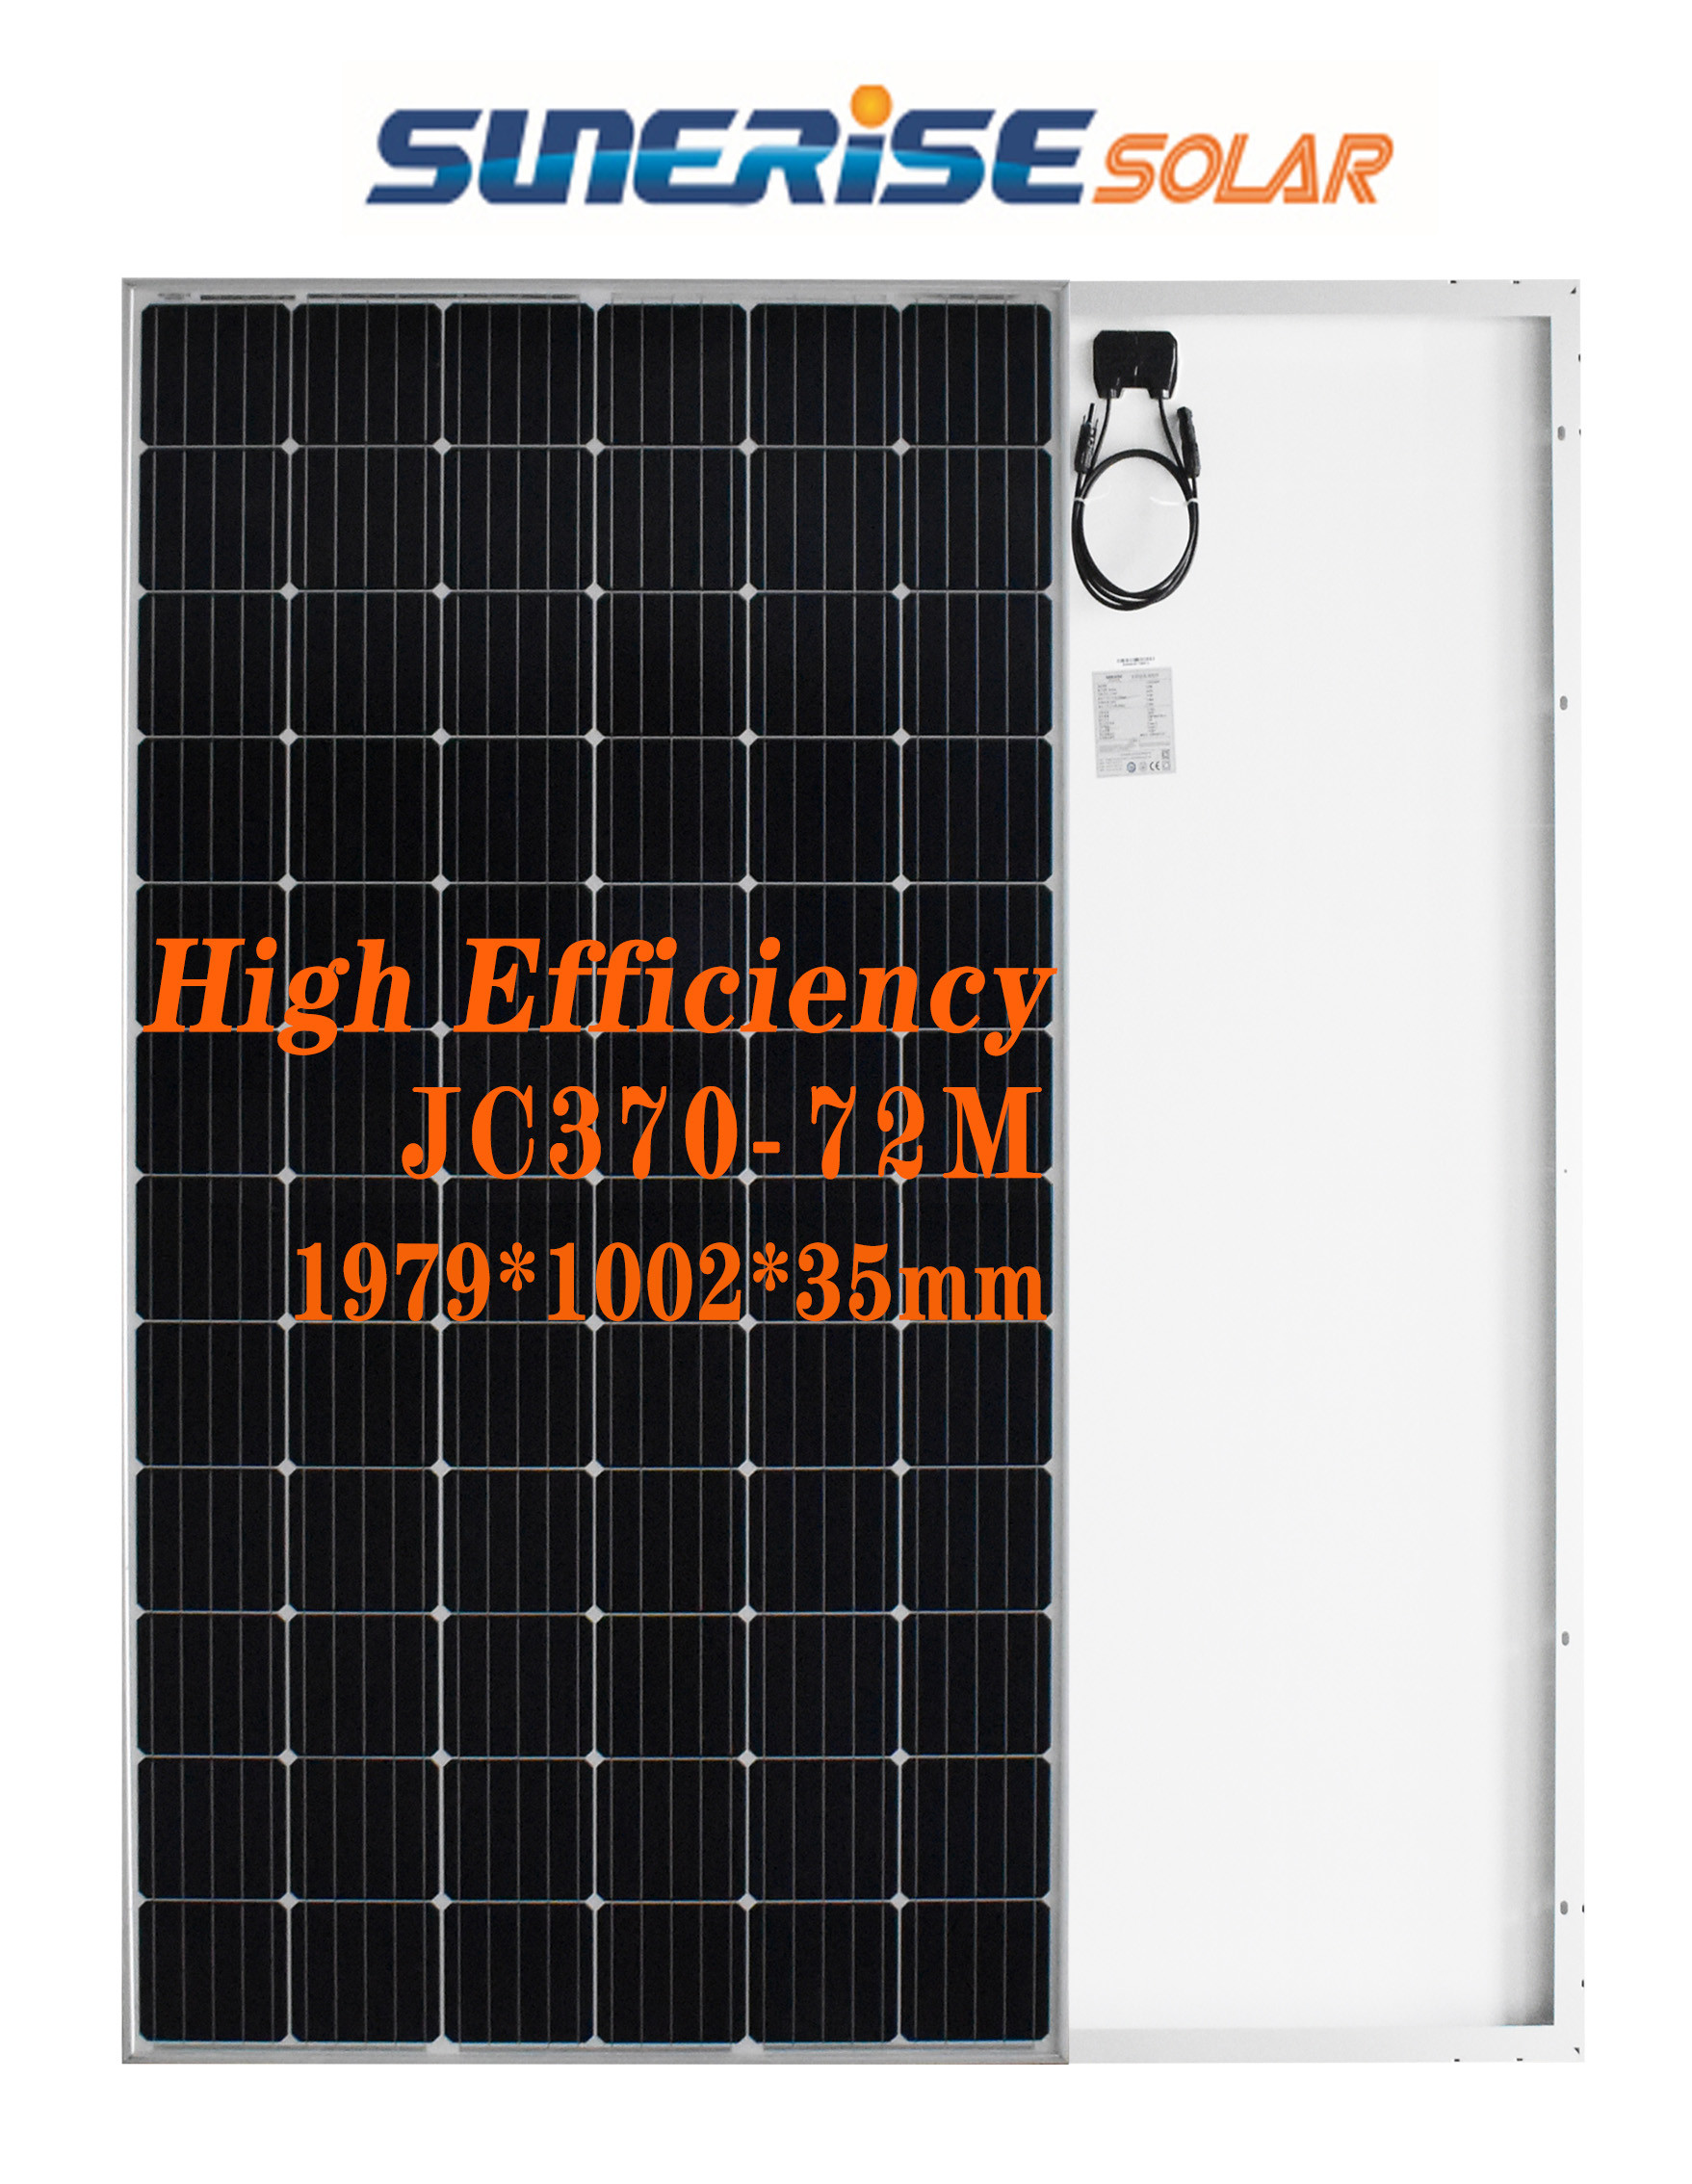 15KW 370W AC220V Solar Photovoltaic Power Plant